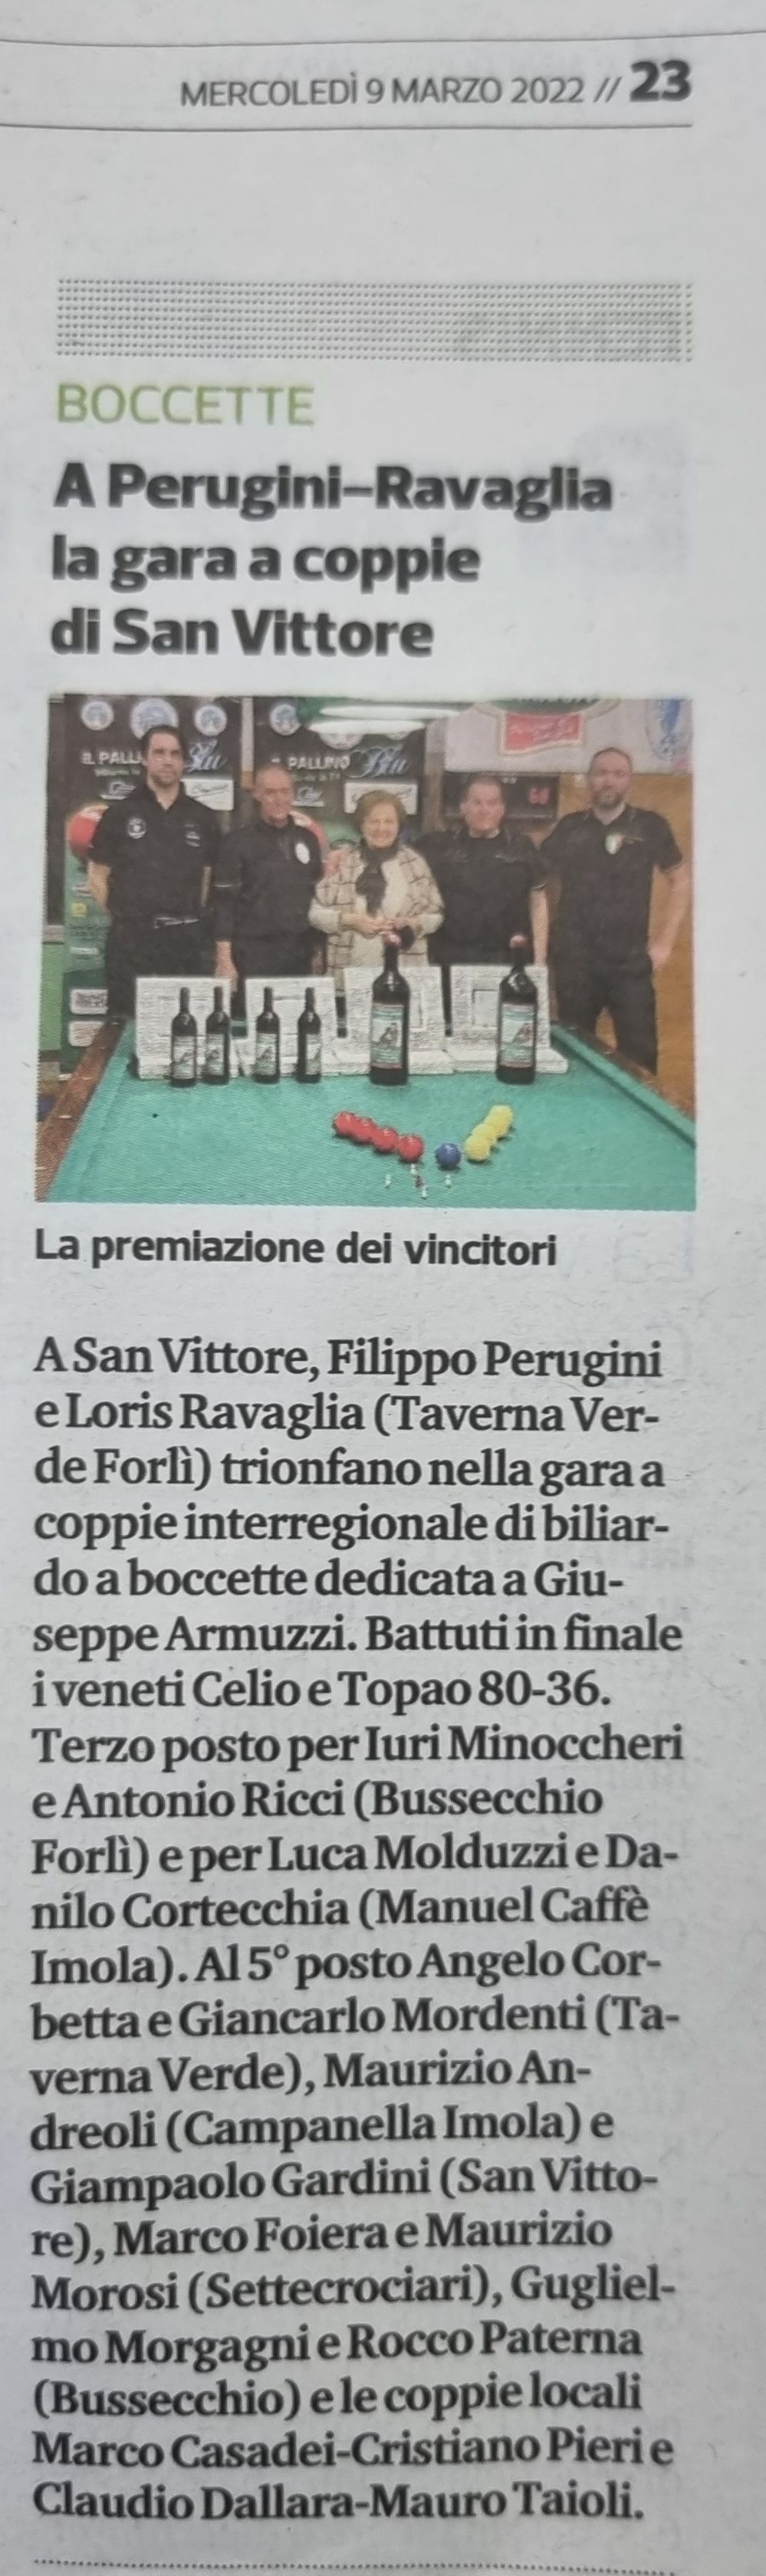 Corriere Romagna Sport 